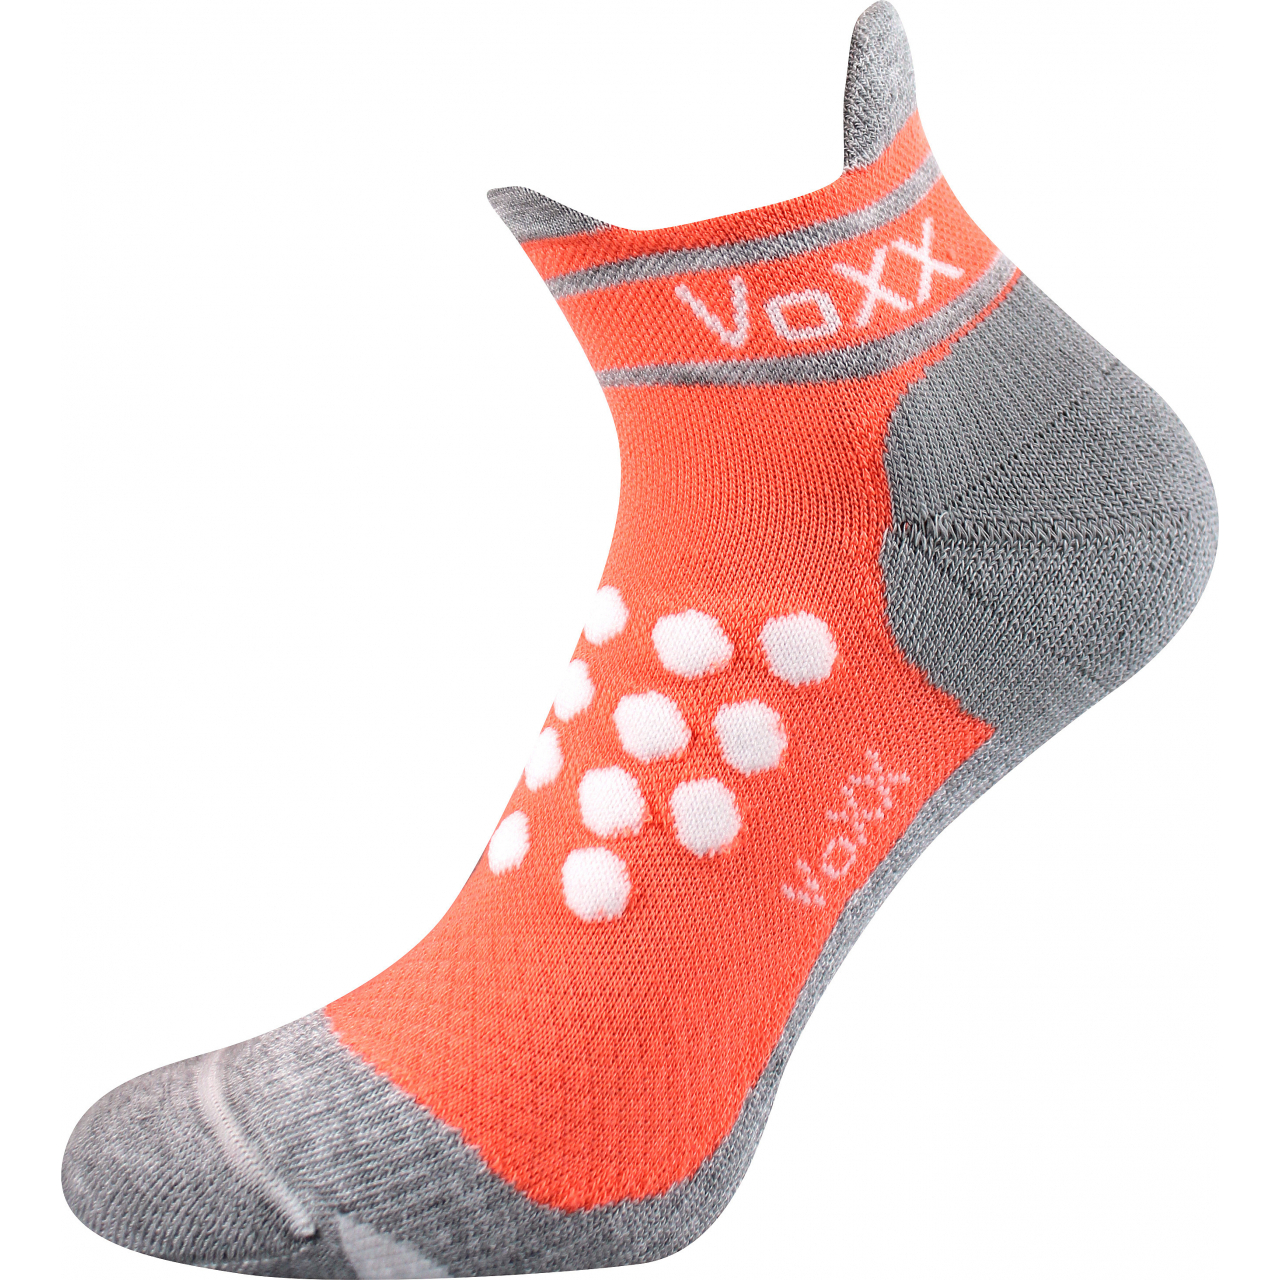 Ponožky unisex sportovní Voxx Sprinter - oranžové-šedé, 35-38